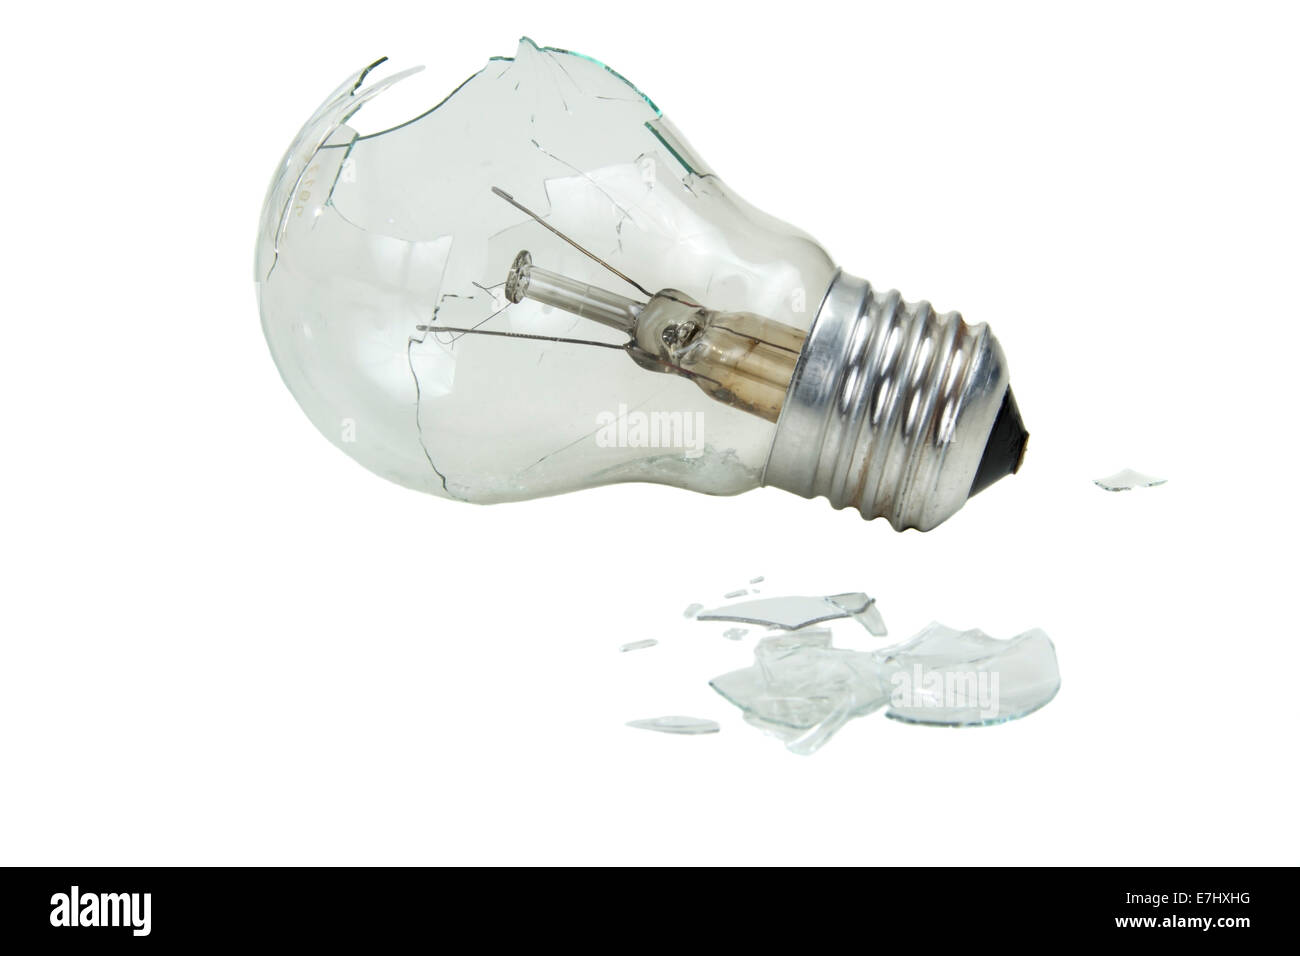 Broken light bulb isolated on white background Stock Photo - Alamy